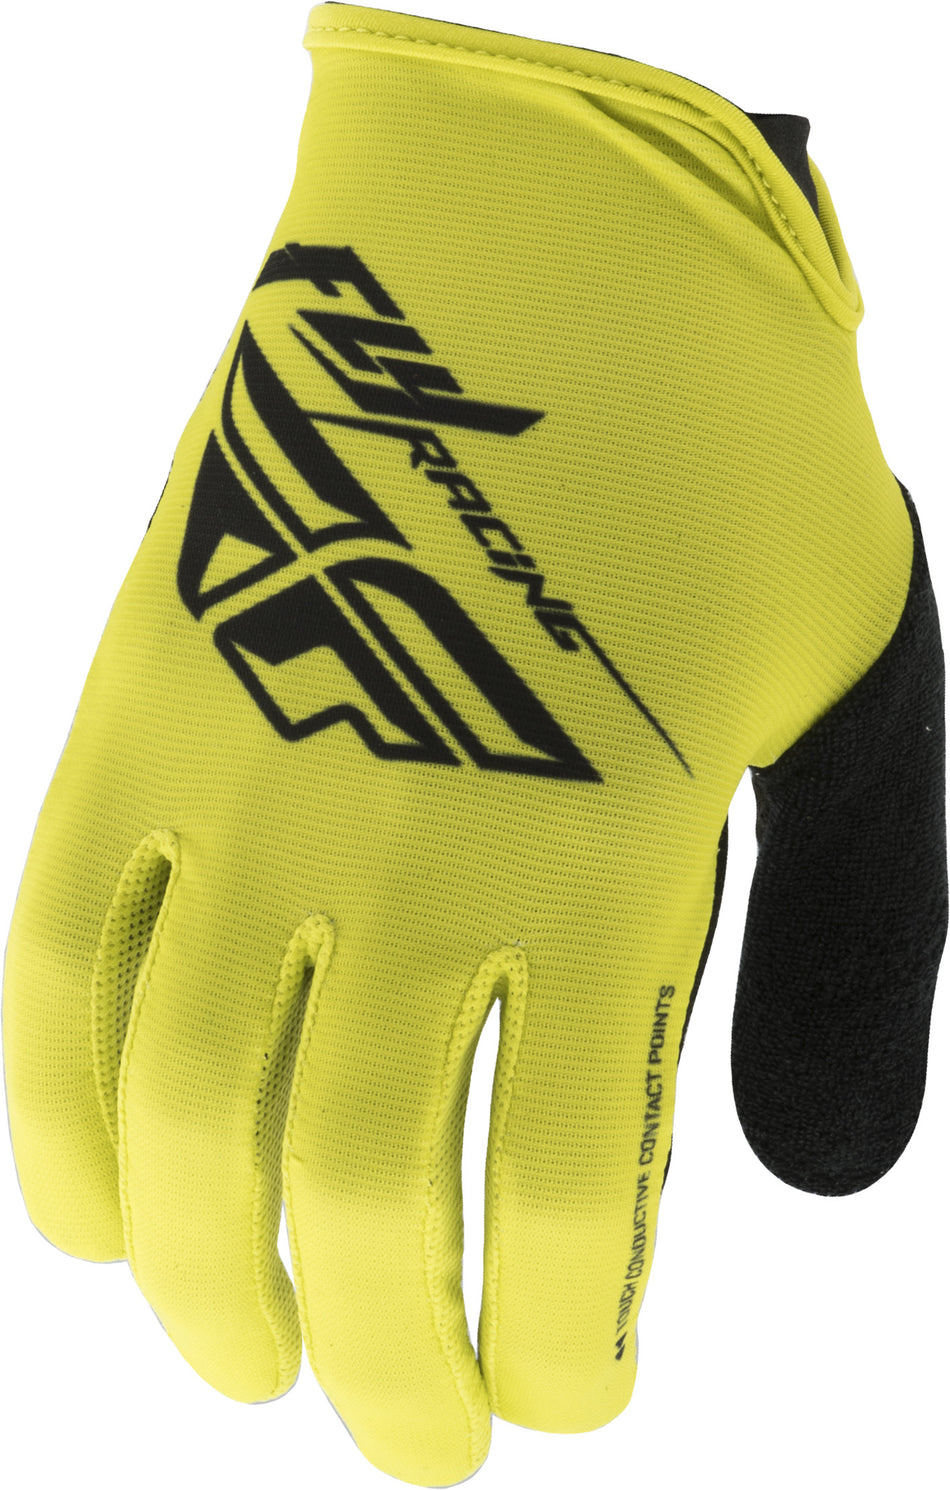 FLY RACING Media Gloves Lime/Black Sz 09 350-09509